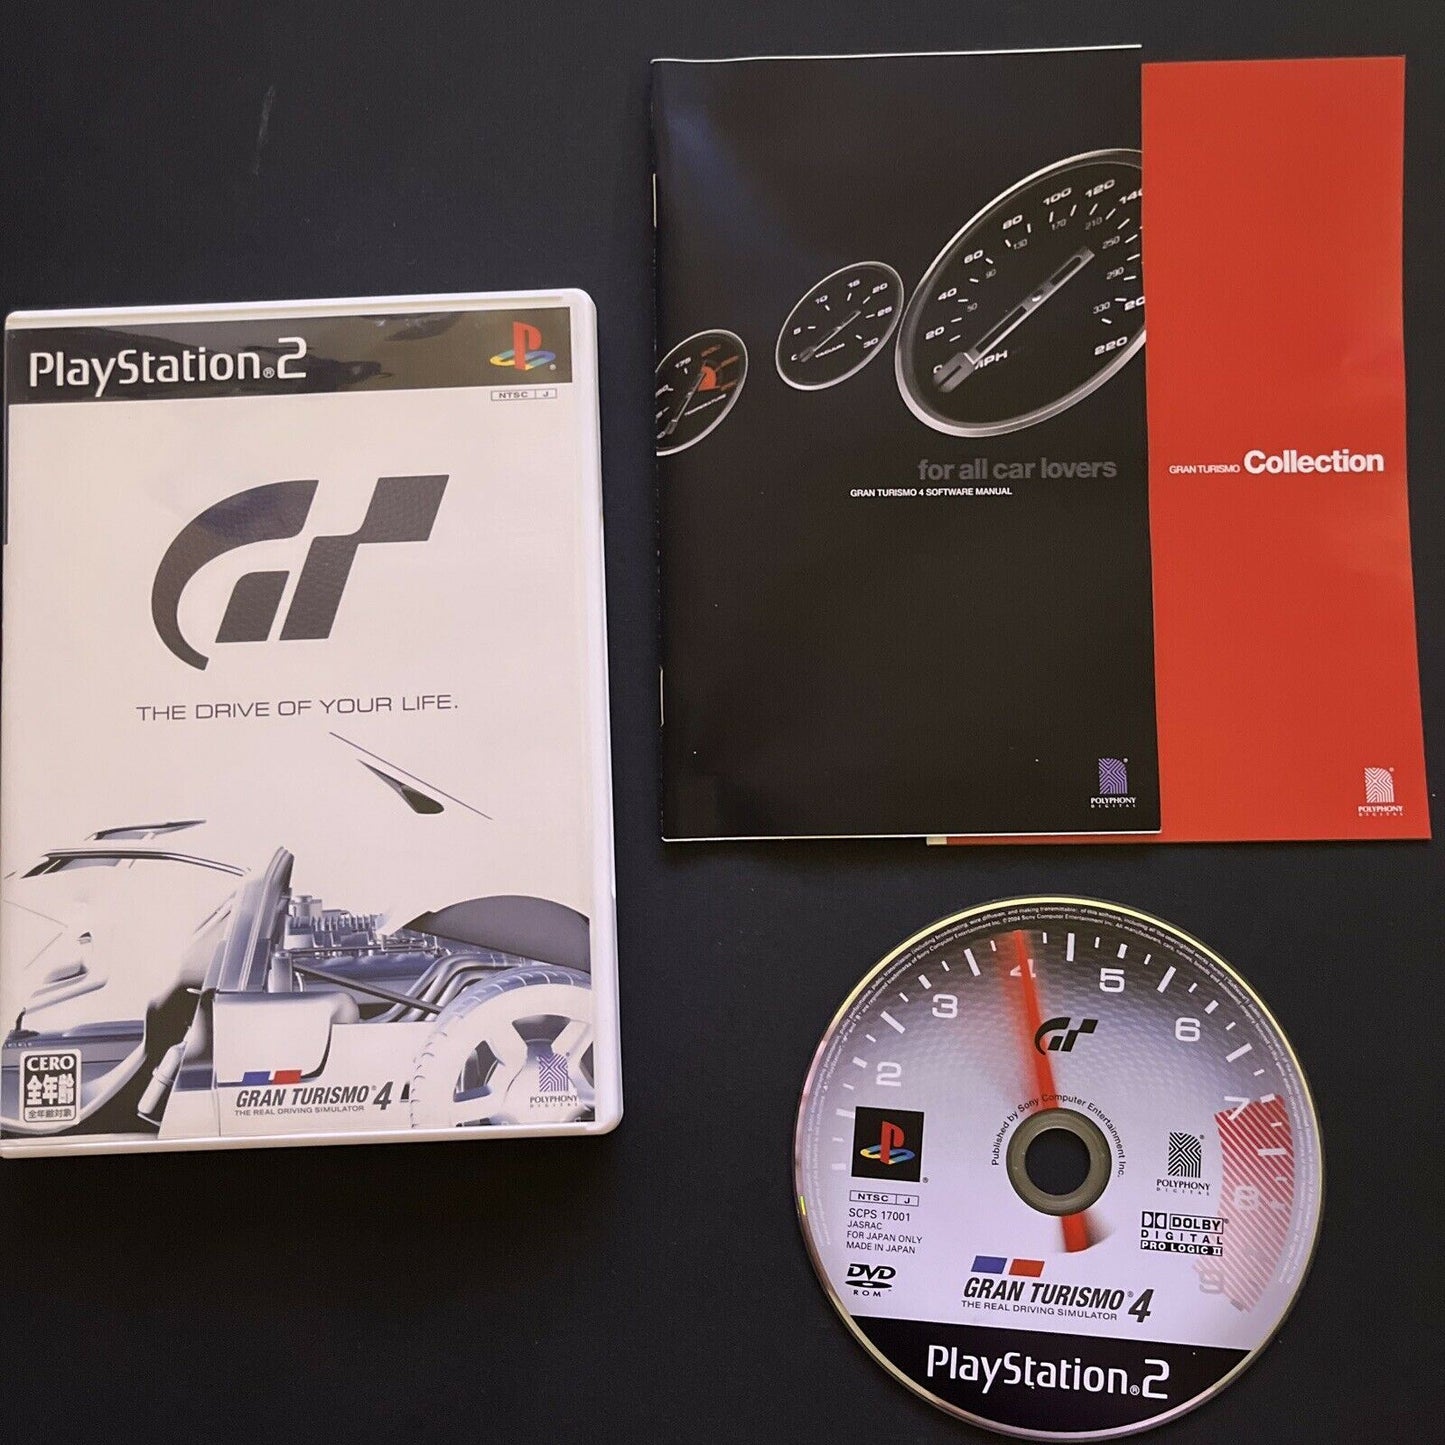 Gran Turismo 4 - PlayStation PS2 NTSC-J JAPAN Game with Manual